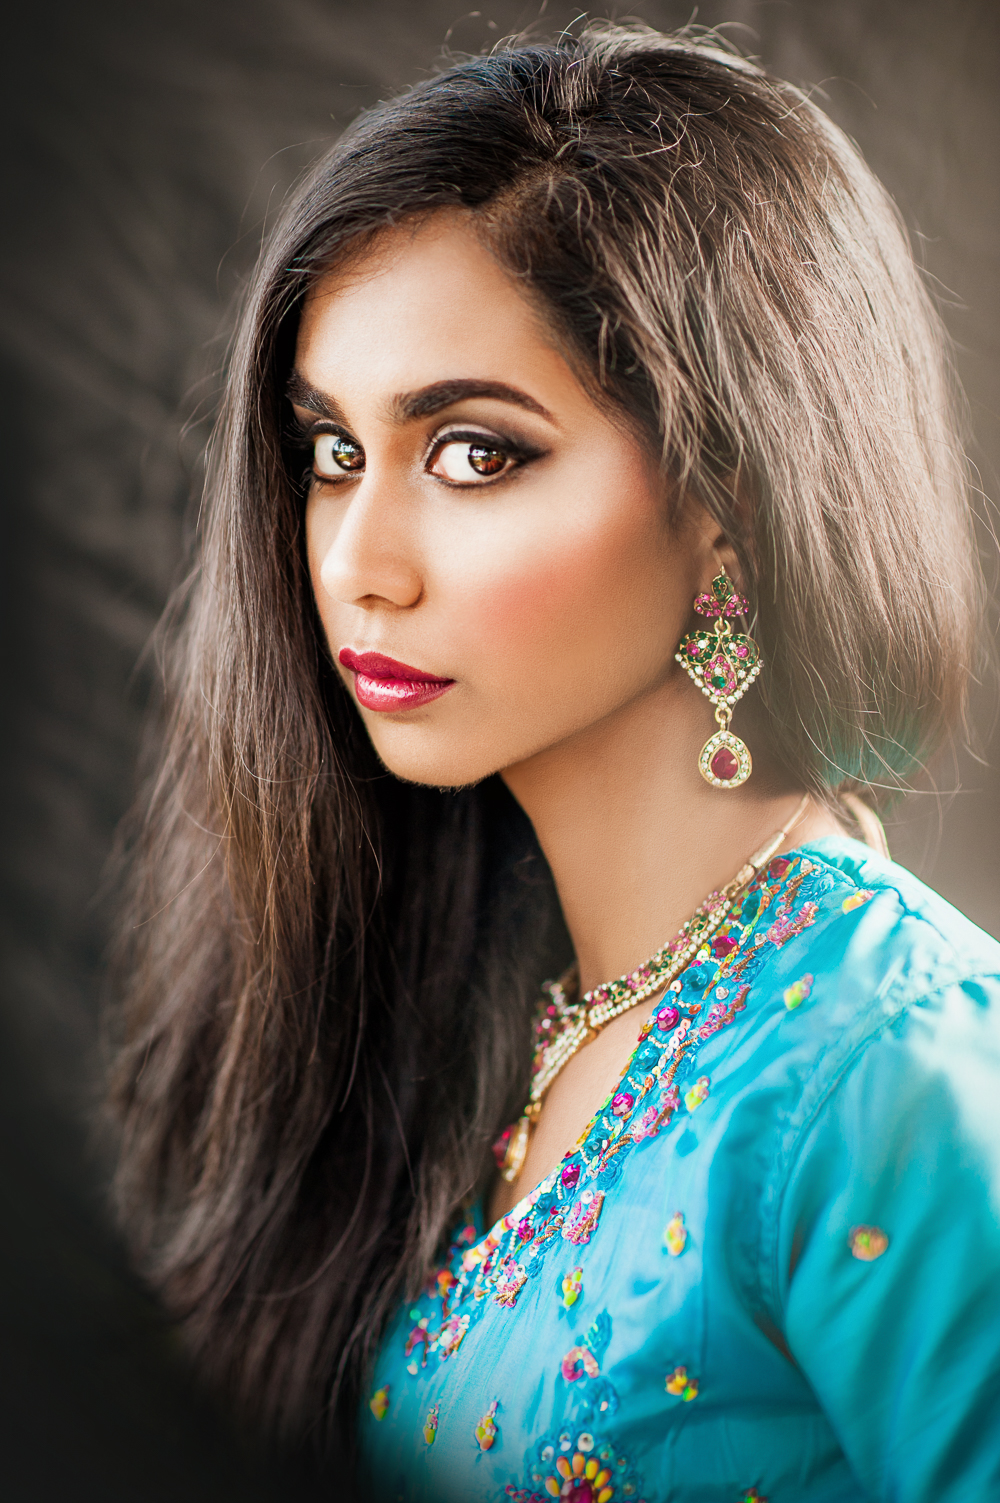 Portrait of a woman wearing Indian style dress